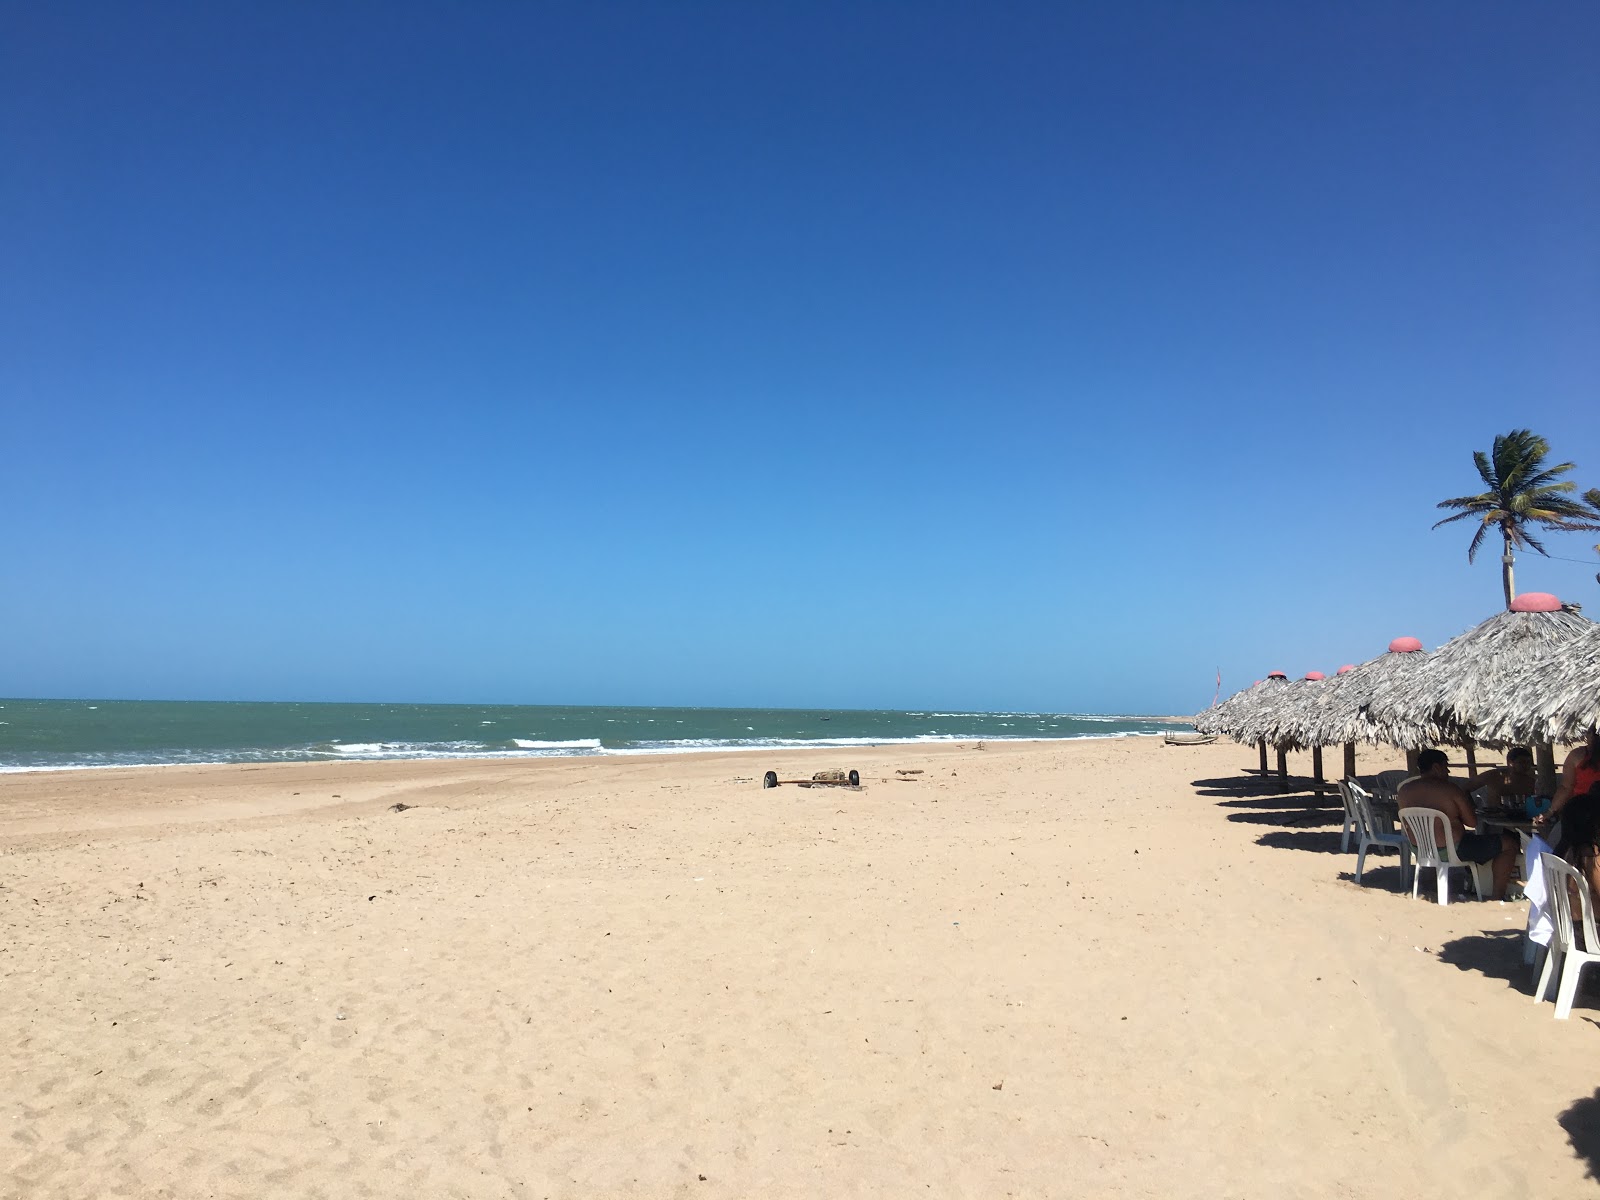 Foto af Praia de Almofala faciliteter område